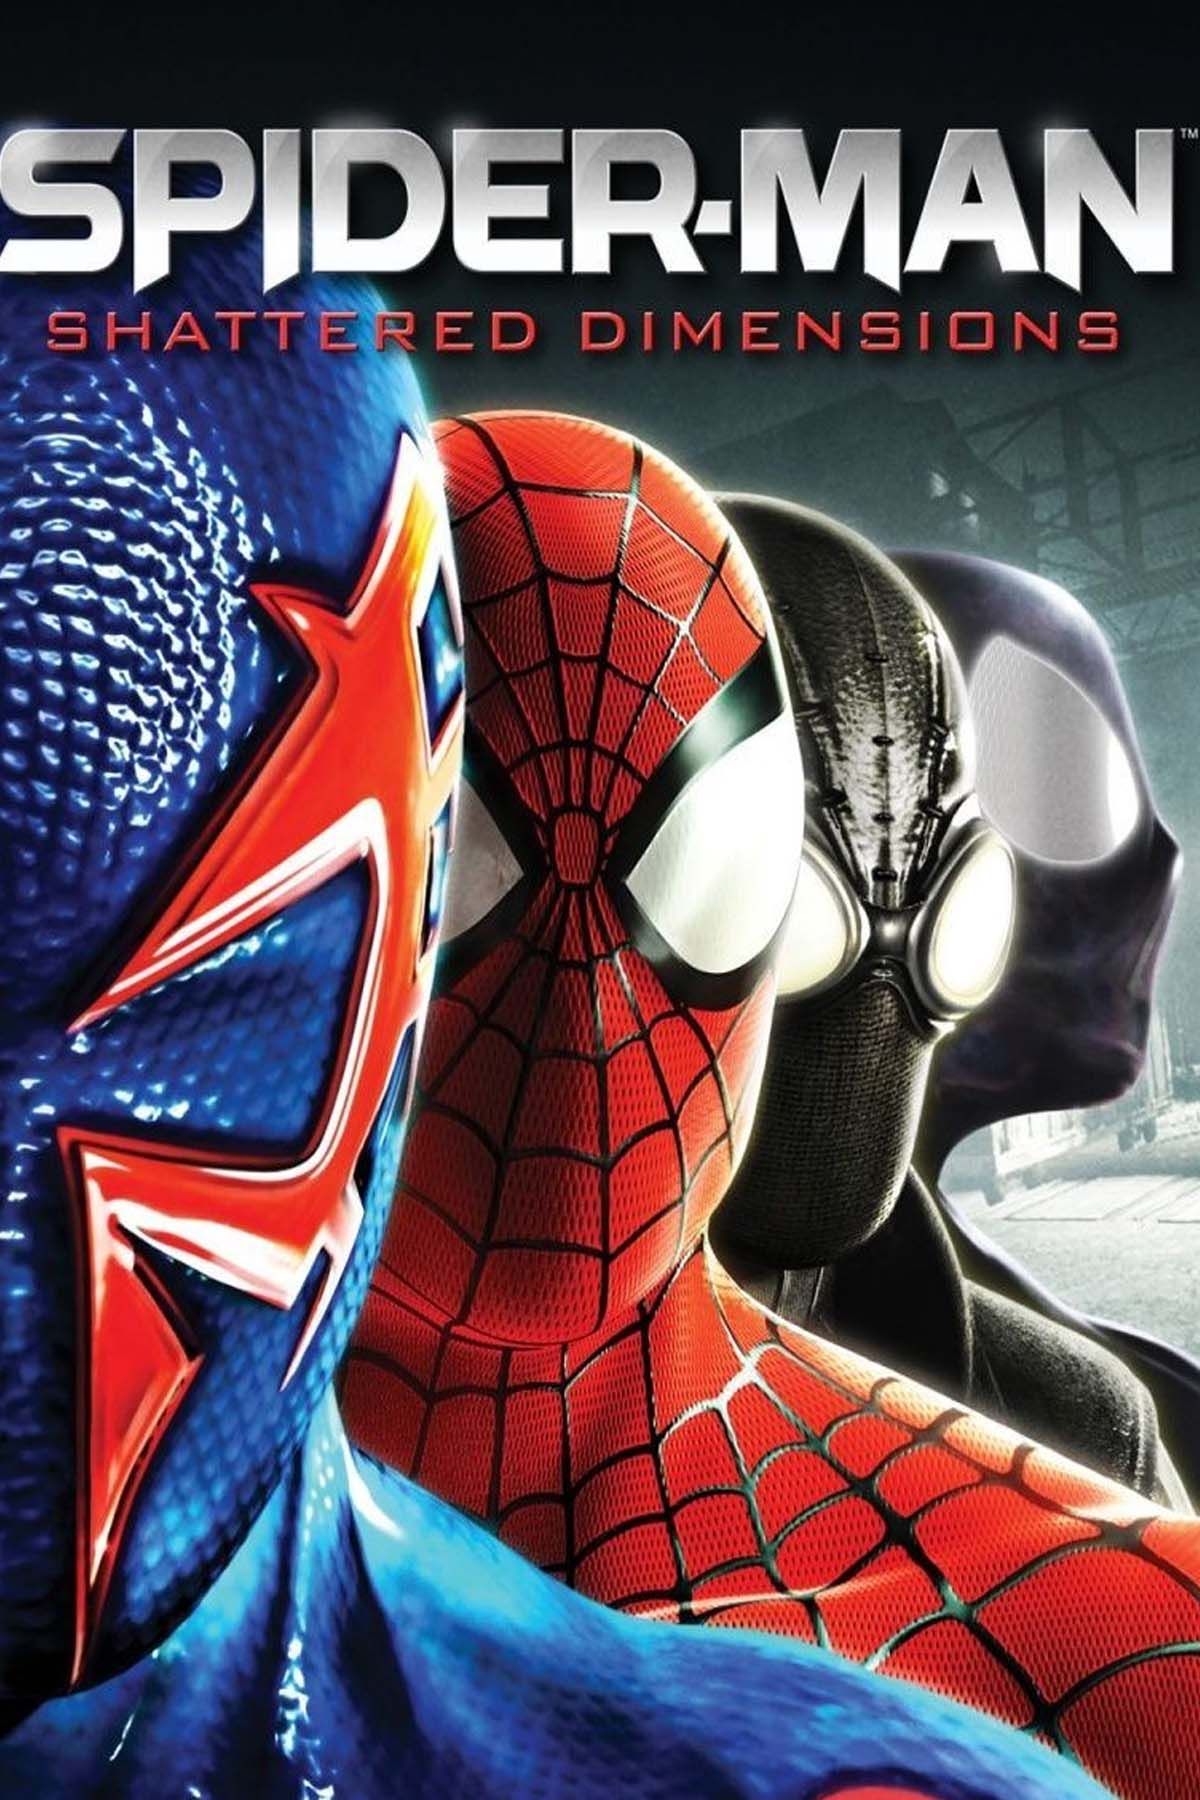 SpiderManDimensionsTagPage